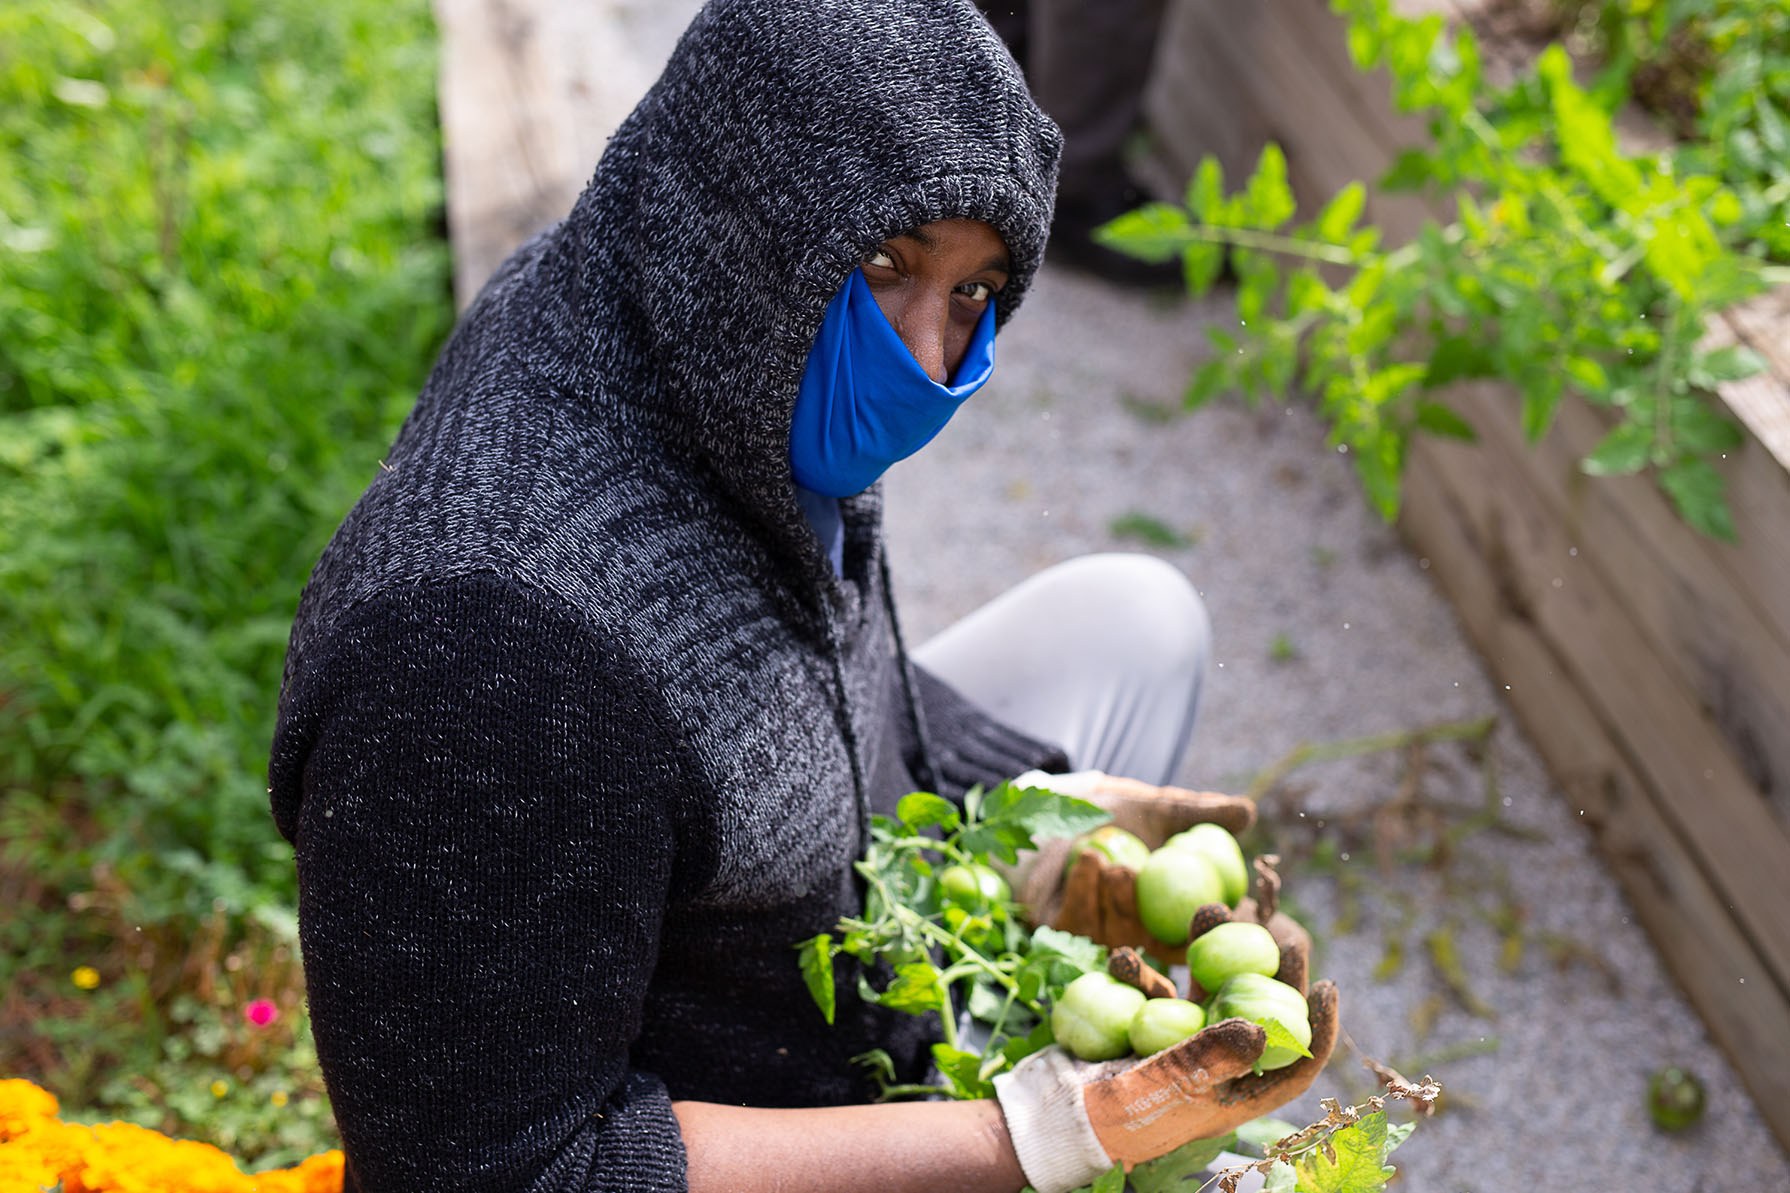 Volunteer in Mask Harvesting Exeter Street Garden